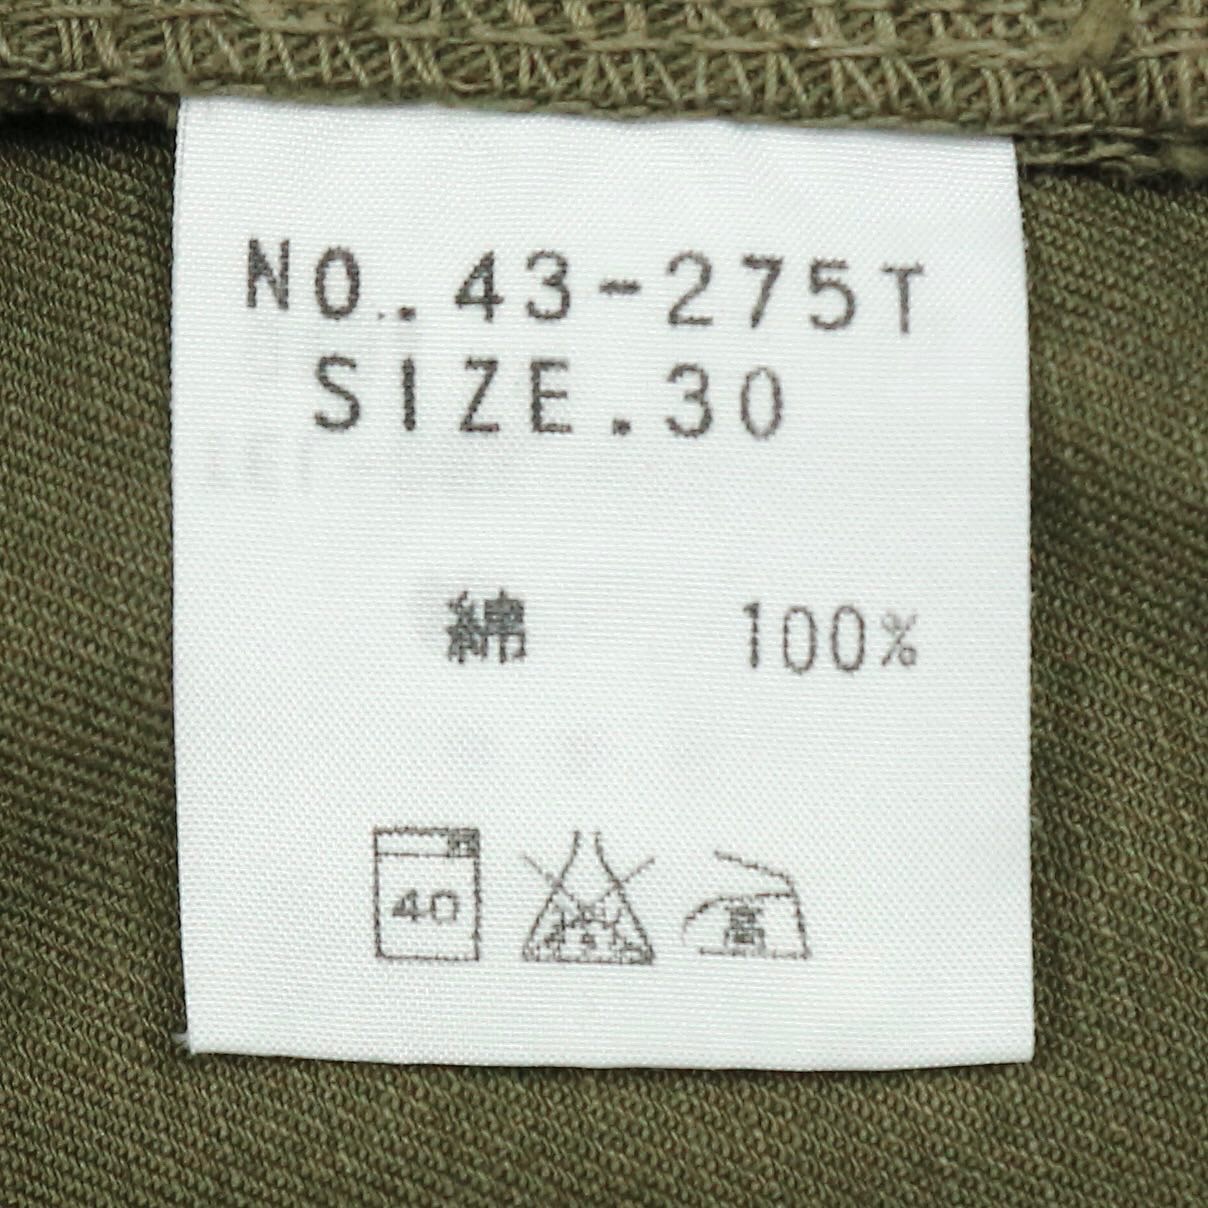 Spellbound Japan Shorts Size 30